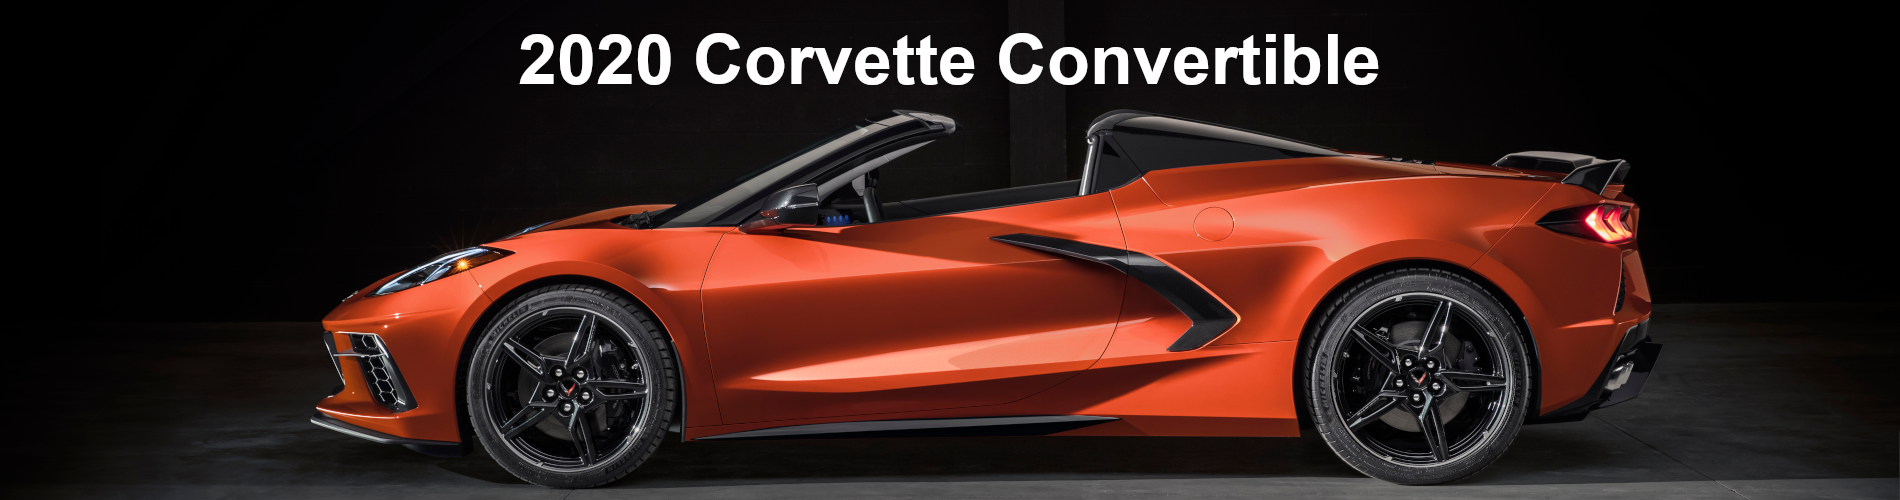 2020 Corvette Convertible